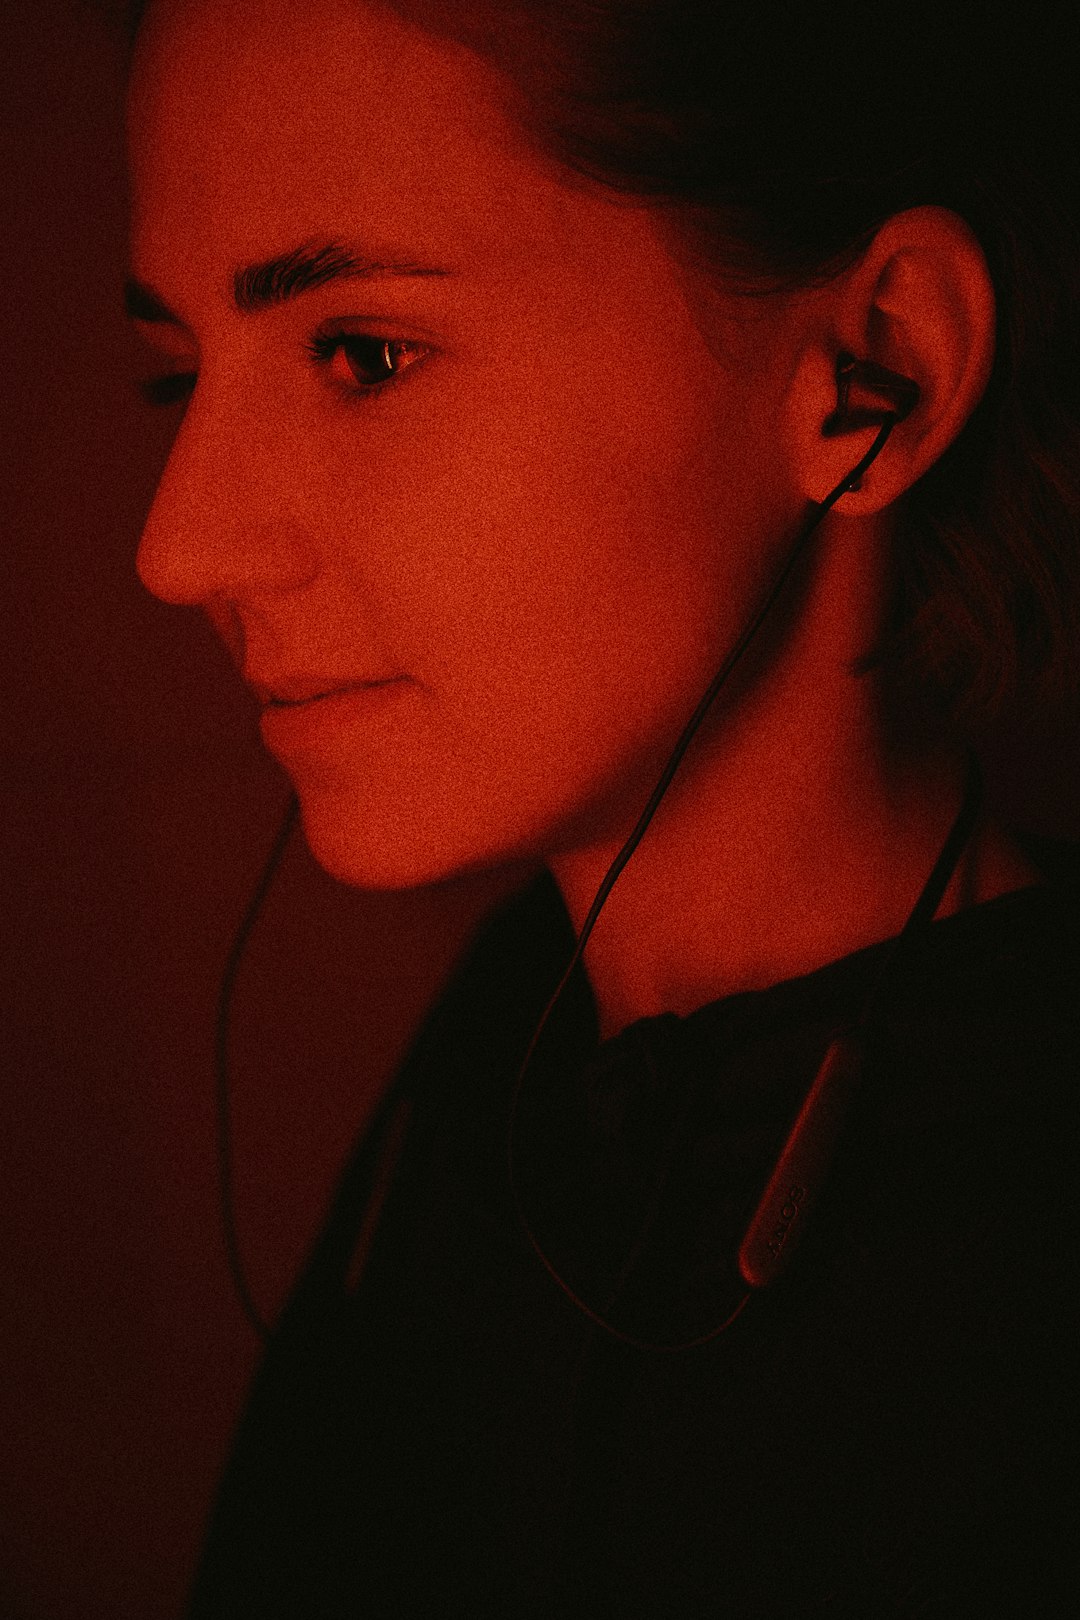 woman in black shirt wearing white earbuds